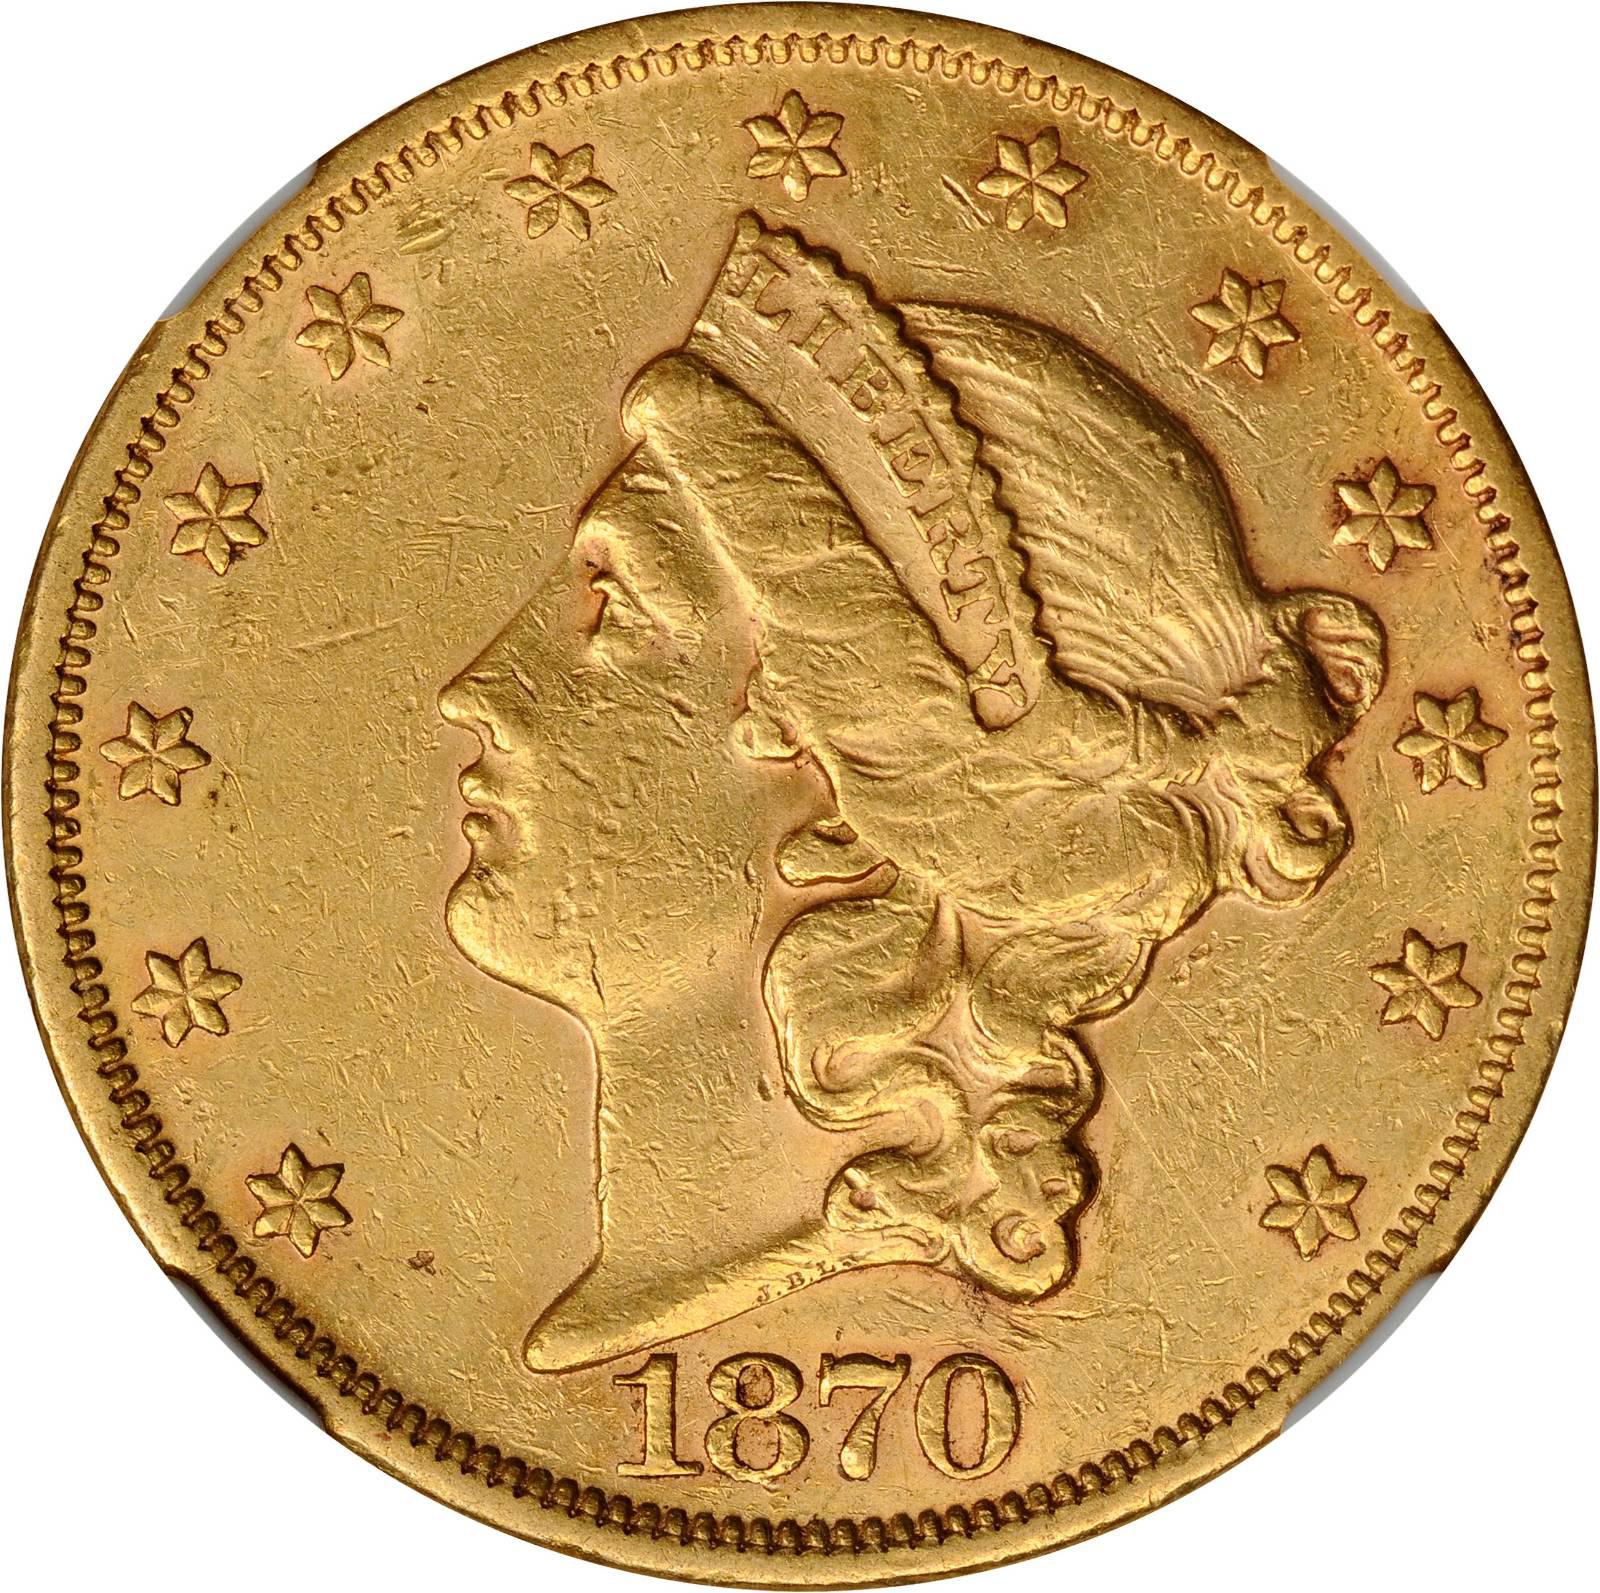 1900 20 dollar gold coin value